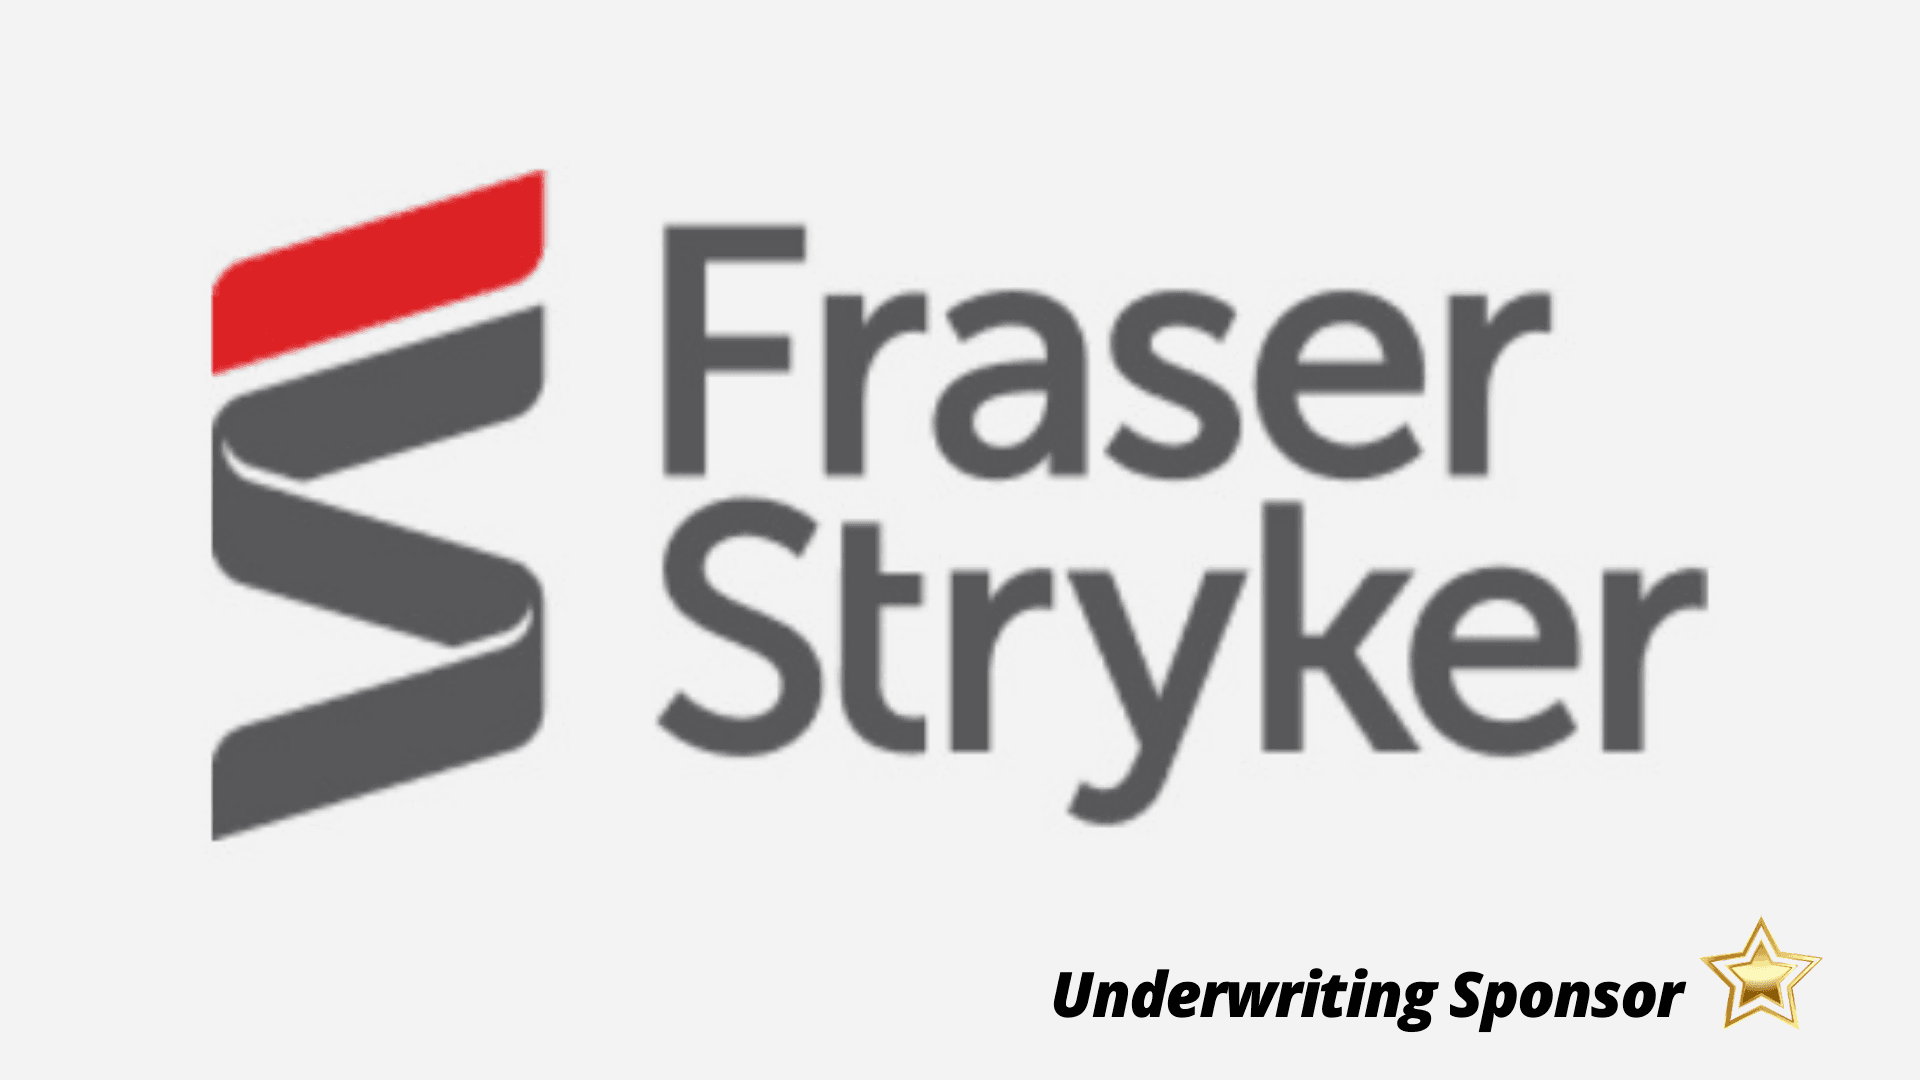 Fraser Stryker